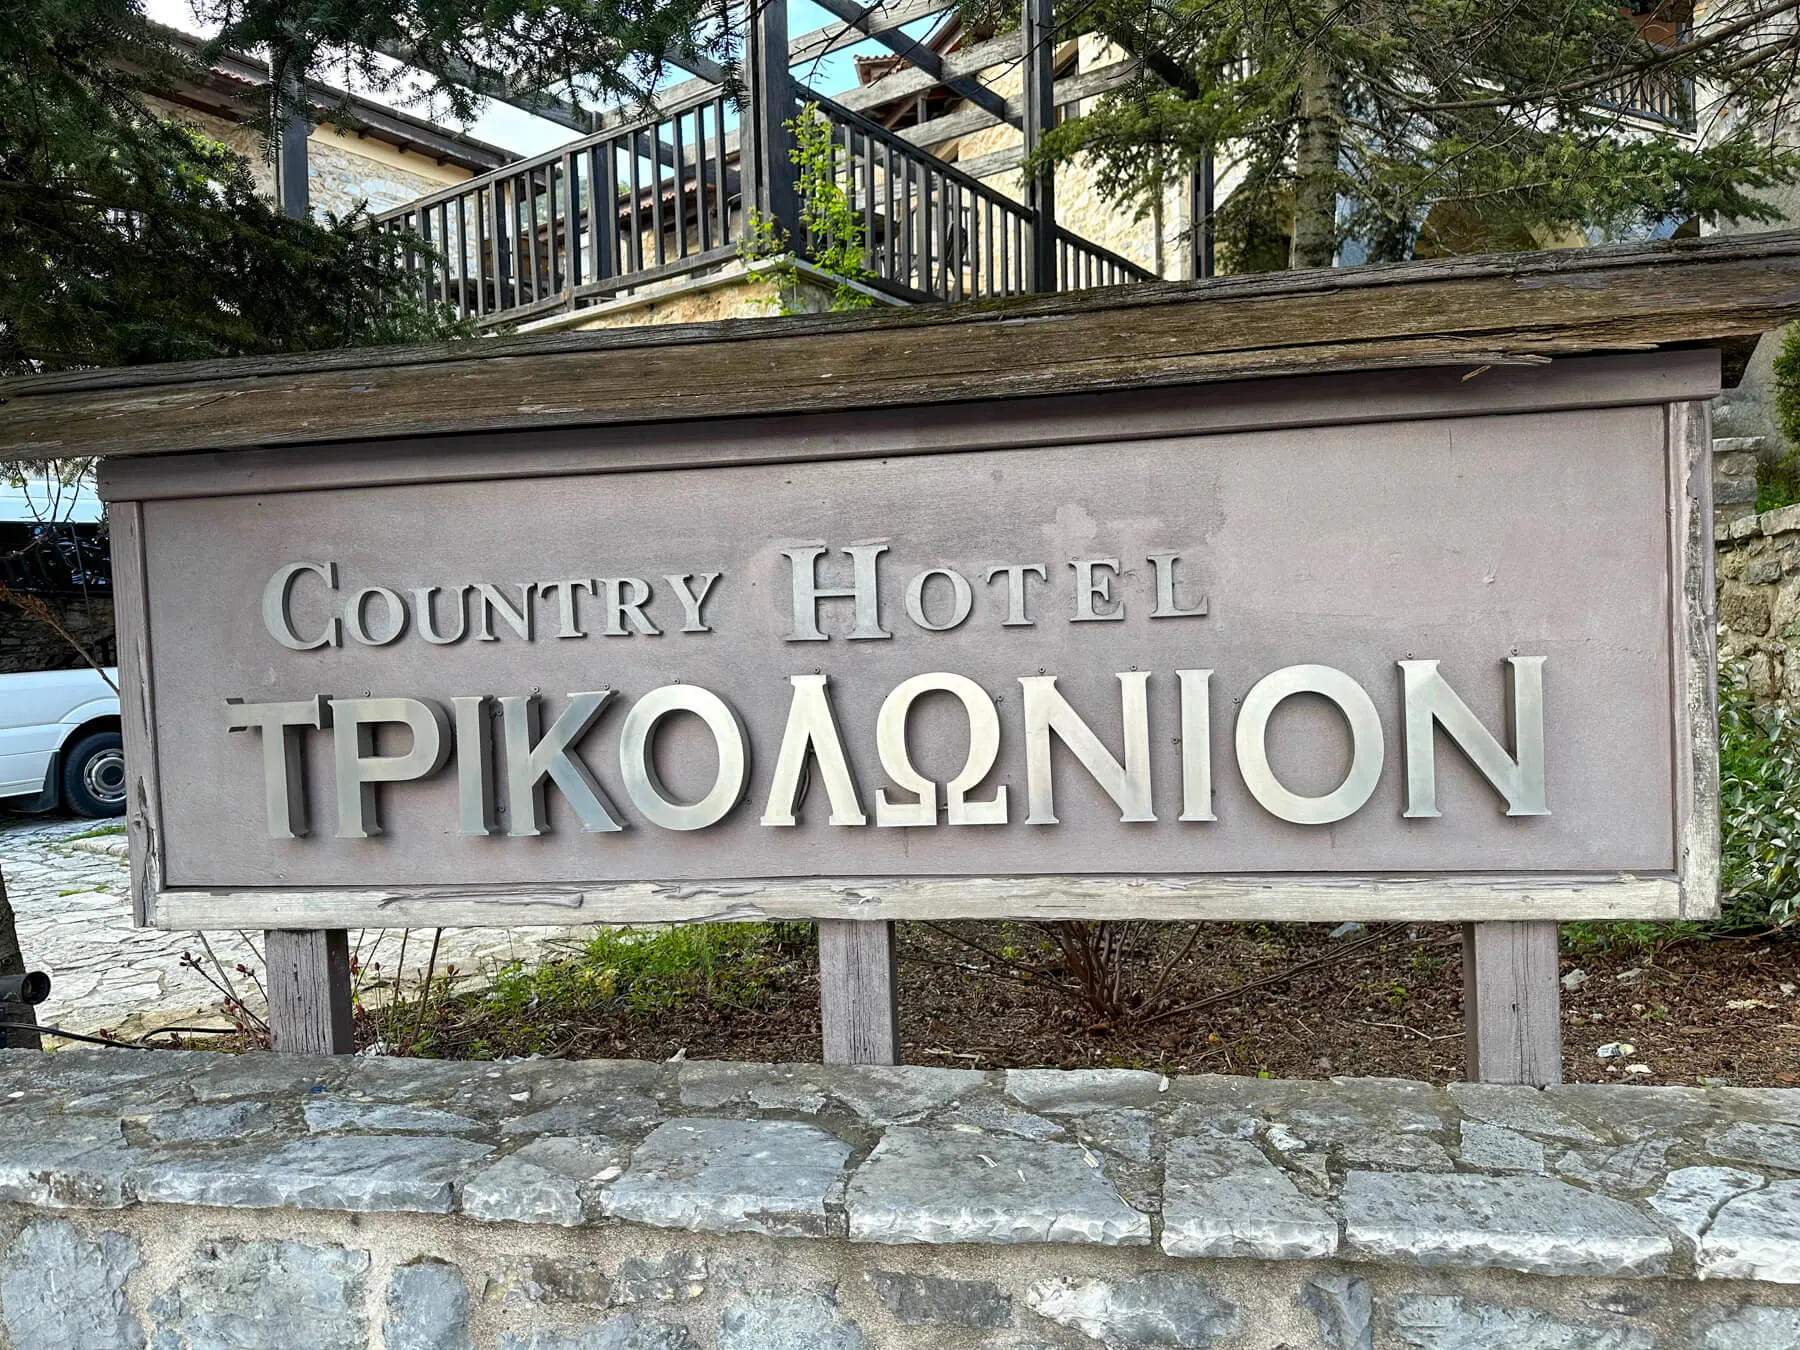 Hotel Trikolonion sign